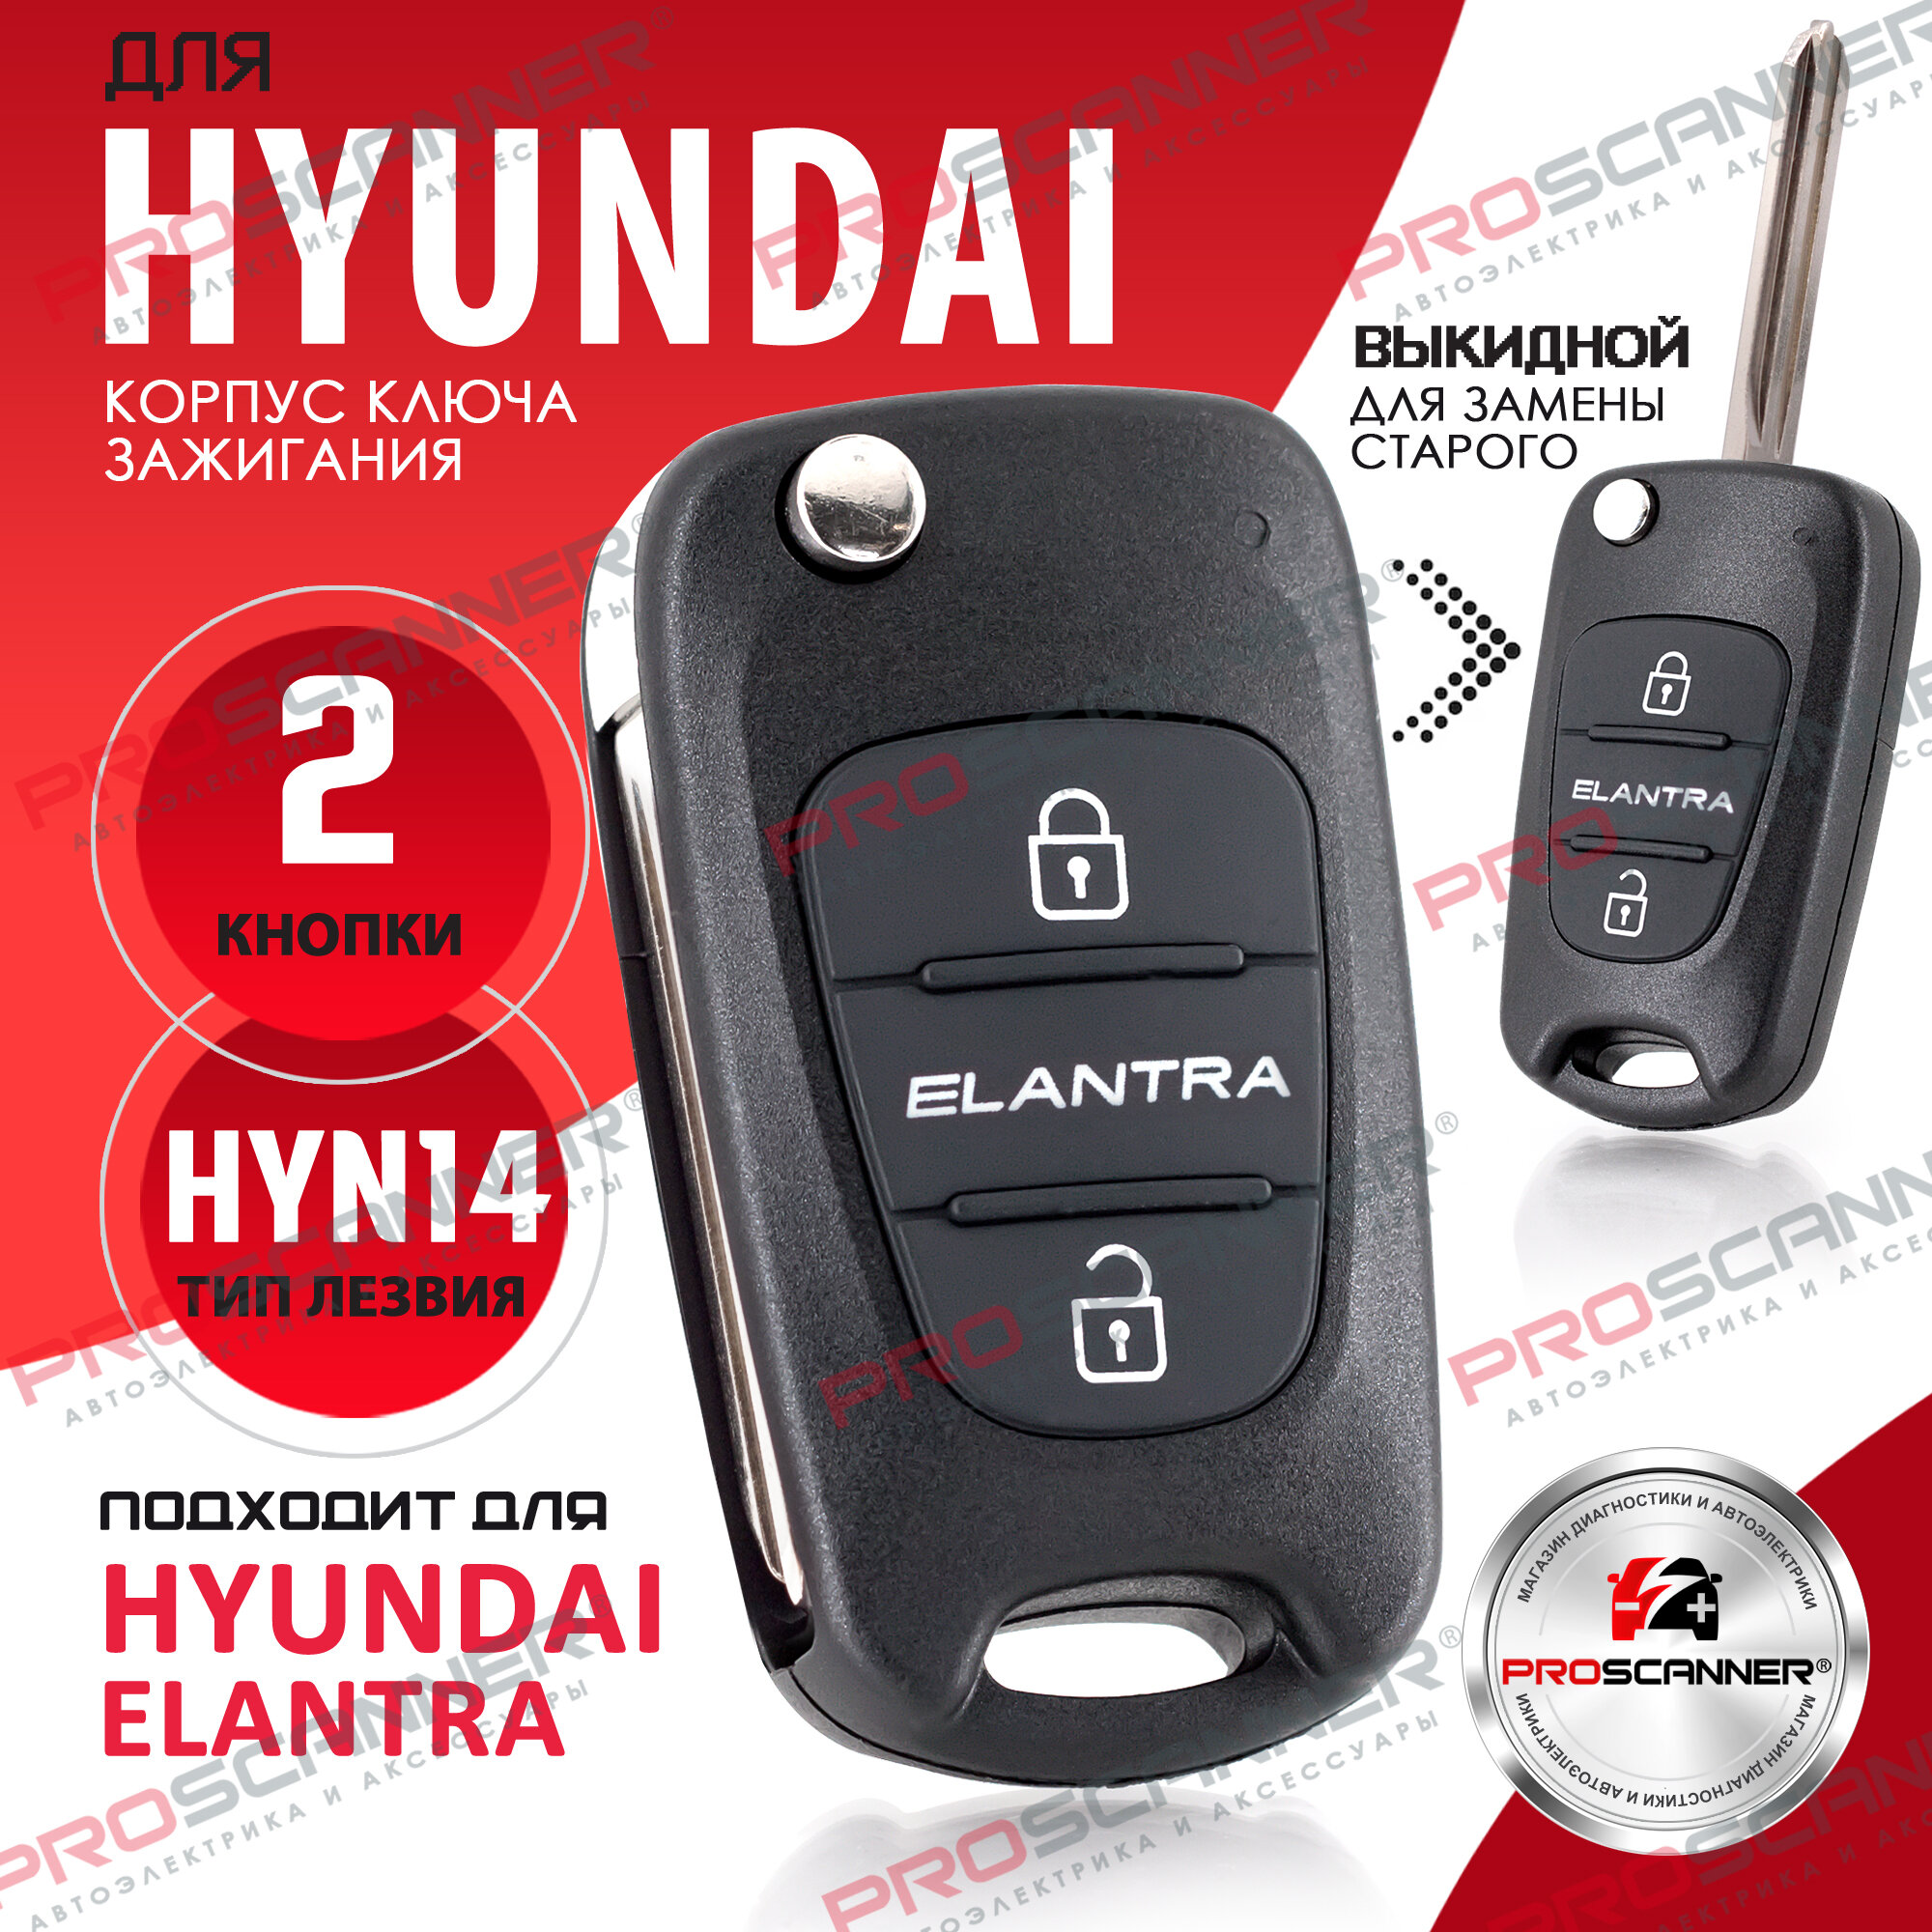 Корпус ключа зажигания для Hyundai Elantra / Хендай Элантра - 1 штука (2х кнопочный ключ) лезвие HYN14R